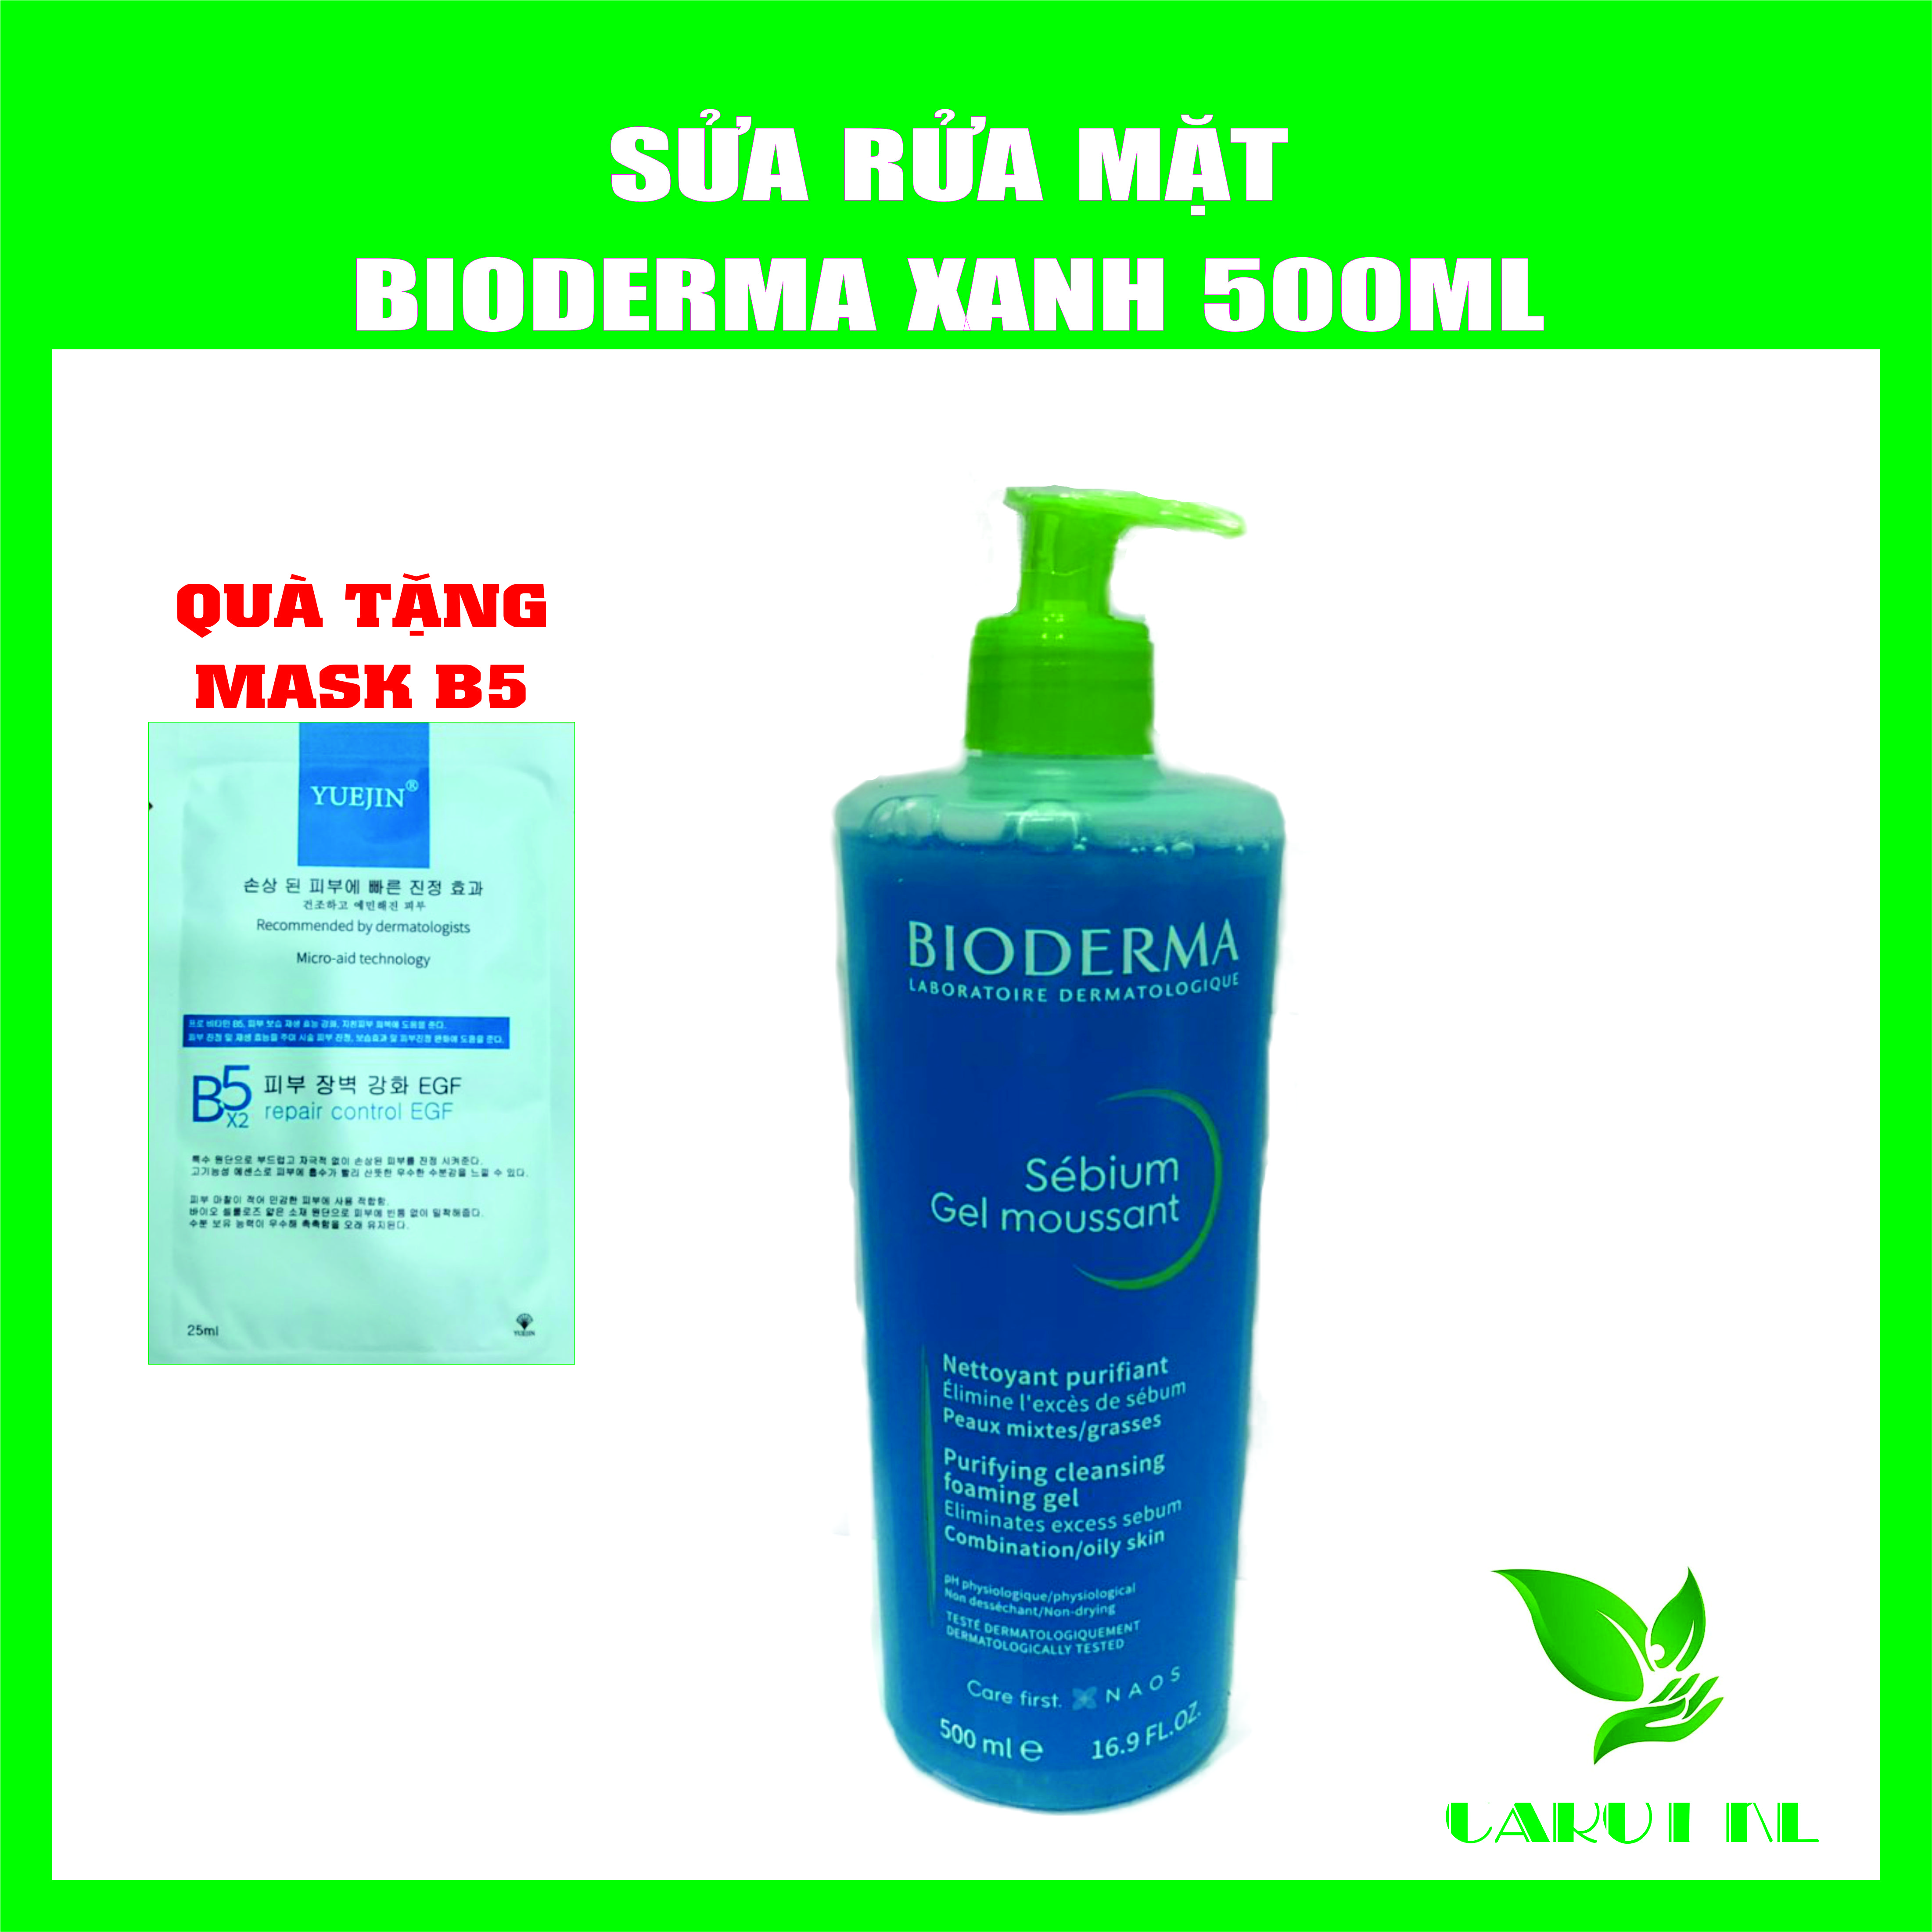 Sửa rửa mặt Bioderma xanh Bioderma sébium gel moussaut cho da dầu mụn 500ml